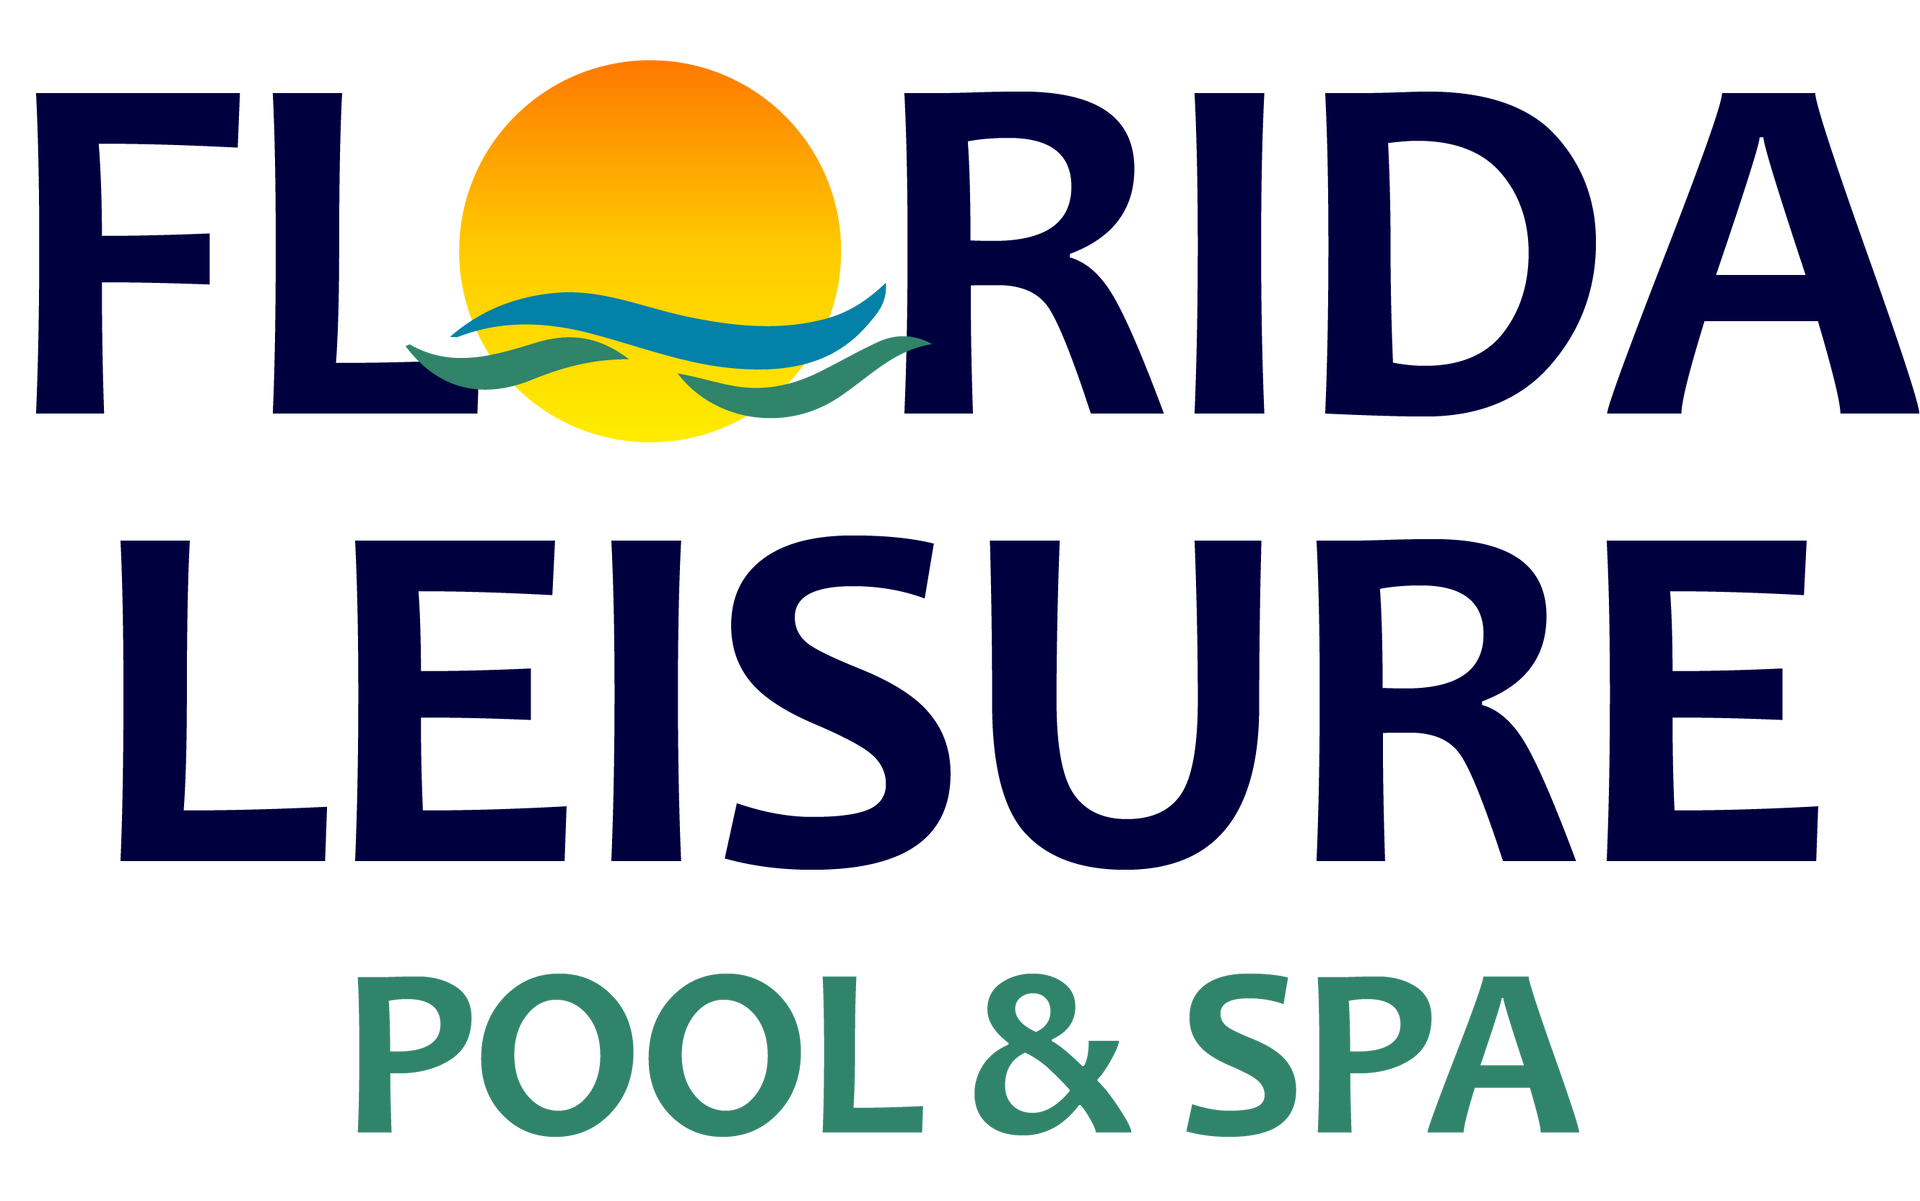 Florida Leisure Pool & Spa